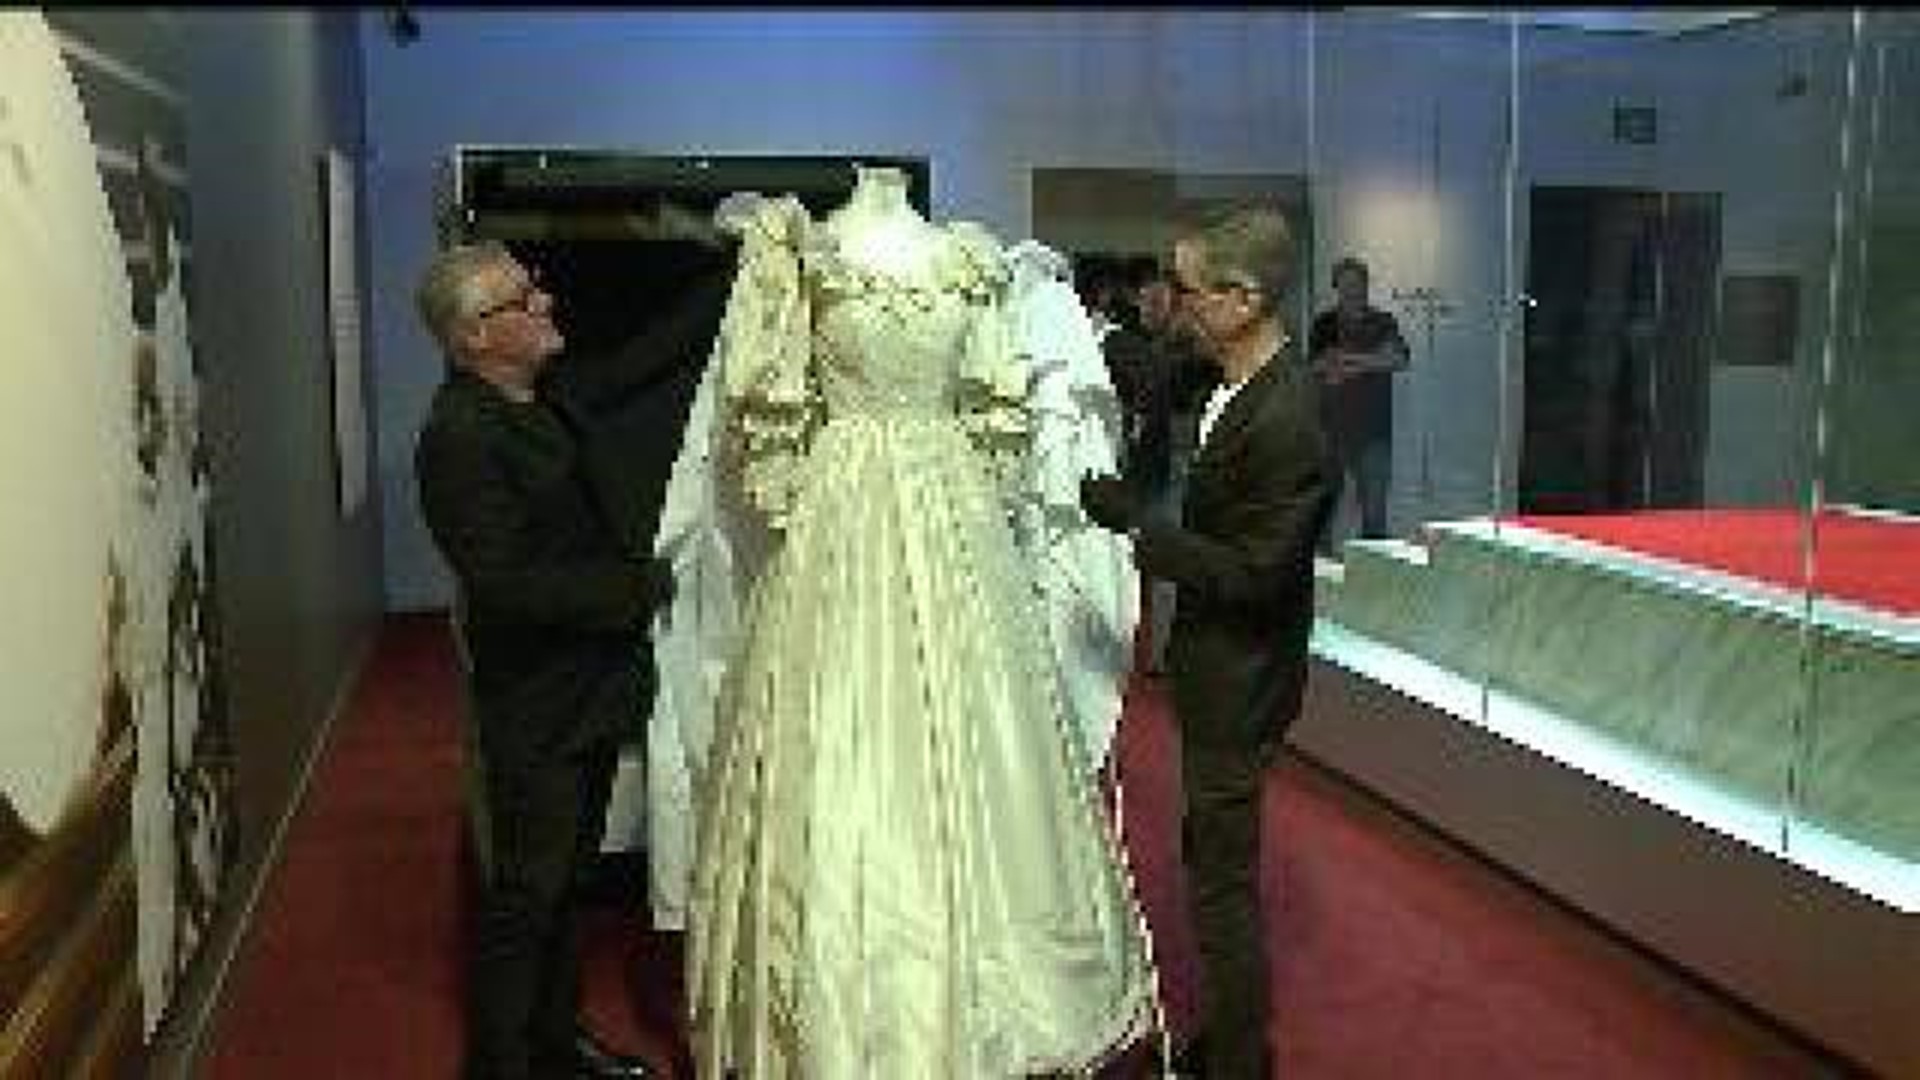 Princess Diana Exhibit goes on display